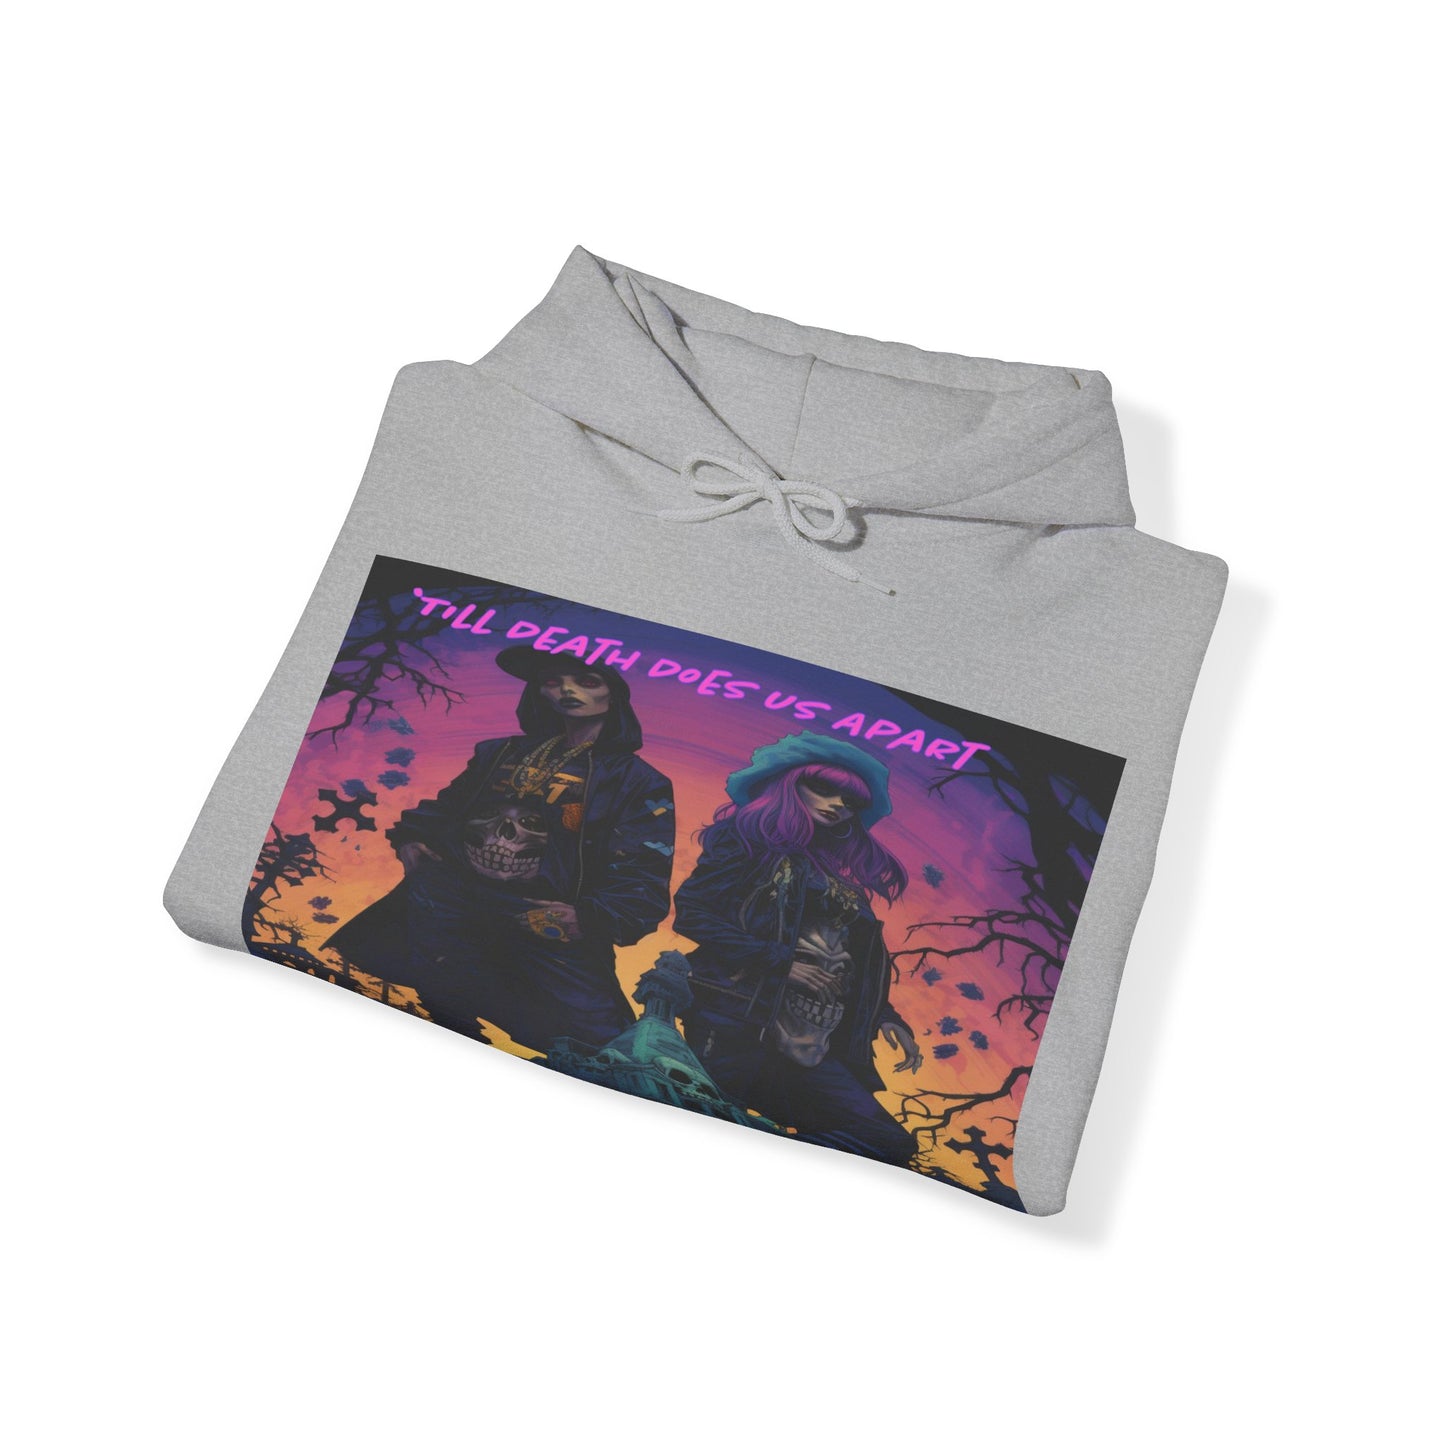 BAD KITTI CUSTOM Graphics Unisex Heavy Blend™ Hooded Sweatshirt_'Till Death Does Us Apart